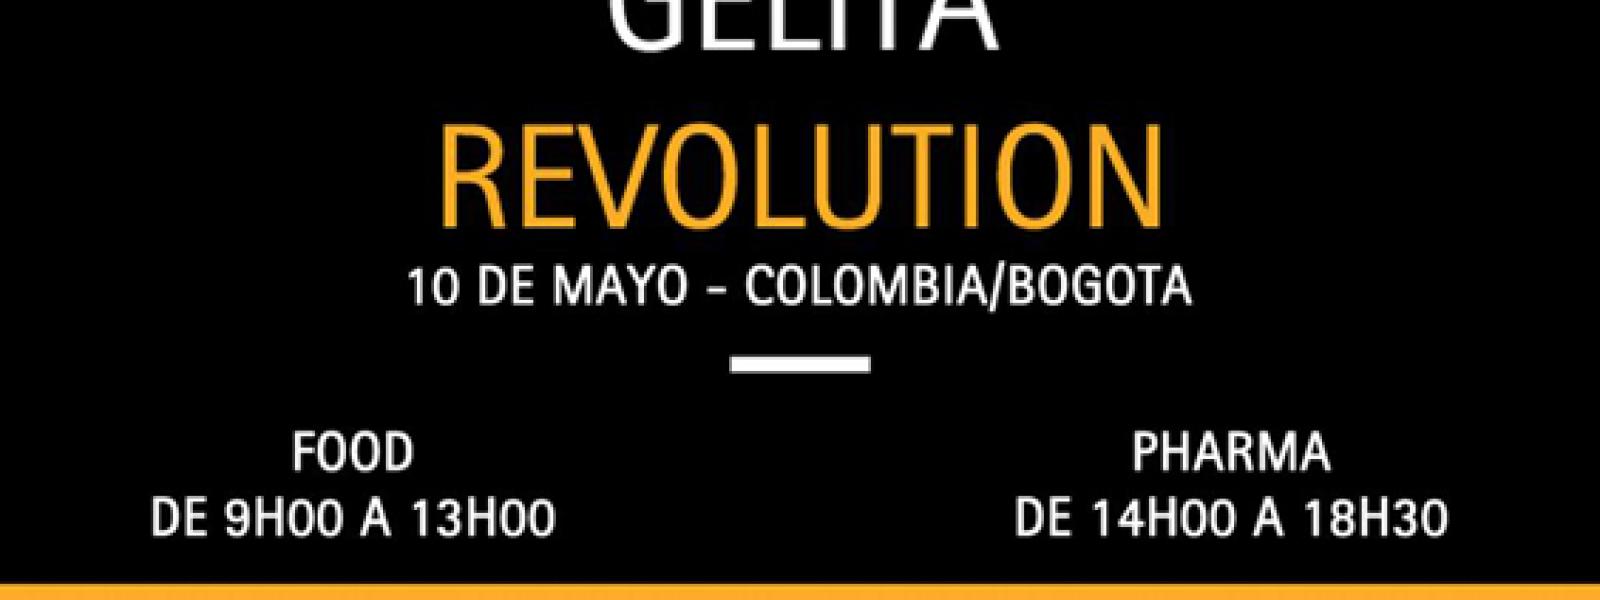 GELITA REVOLUTION - COLOMBIA